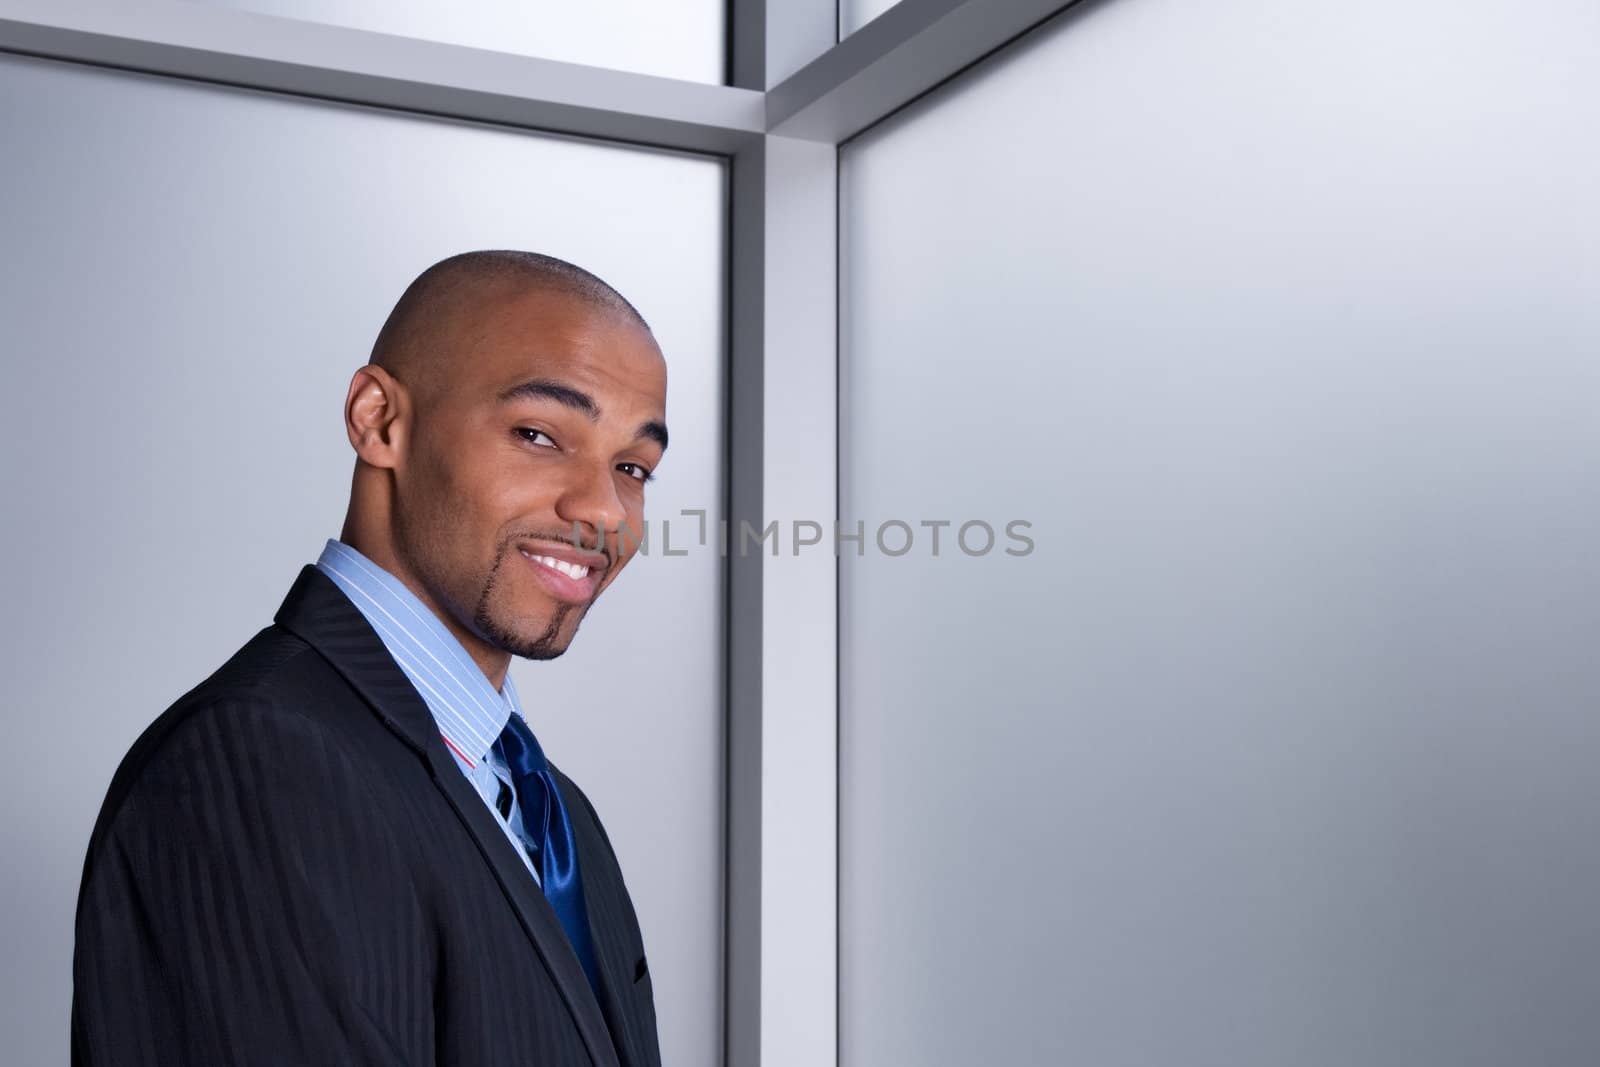 Portrait of a smiling good-looking businessman beside an office window.